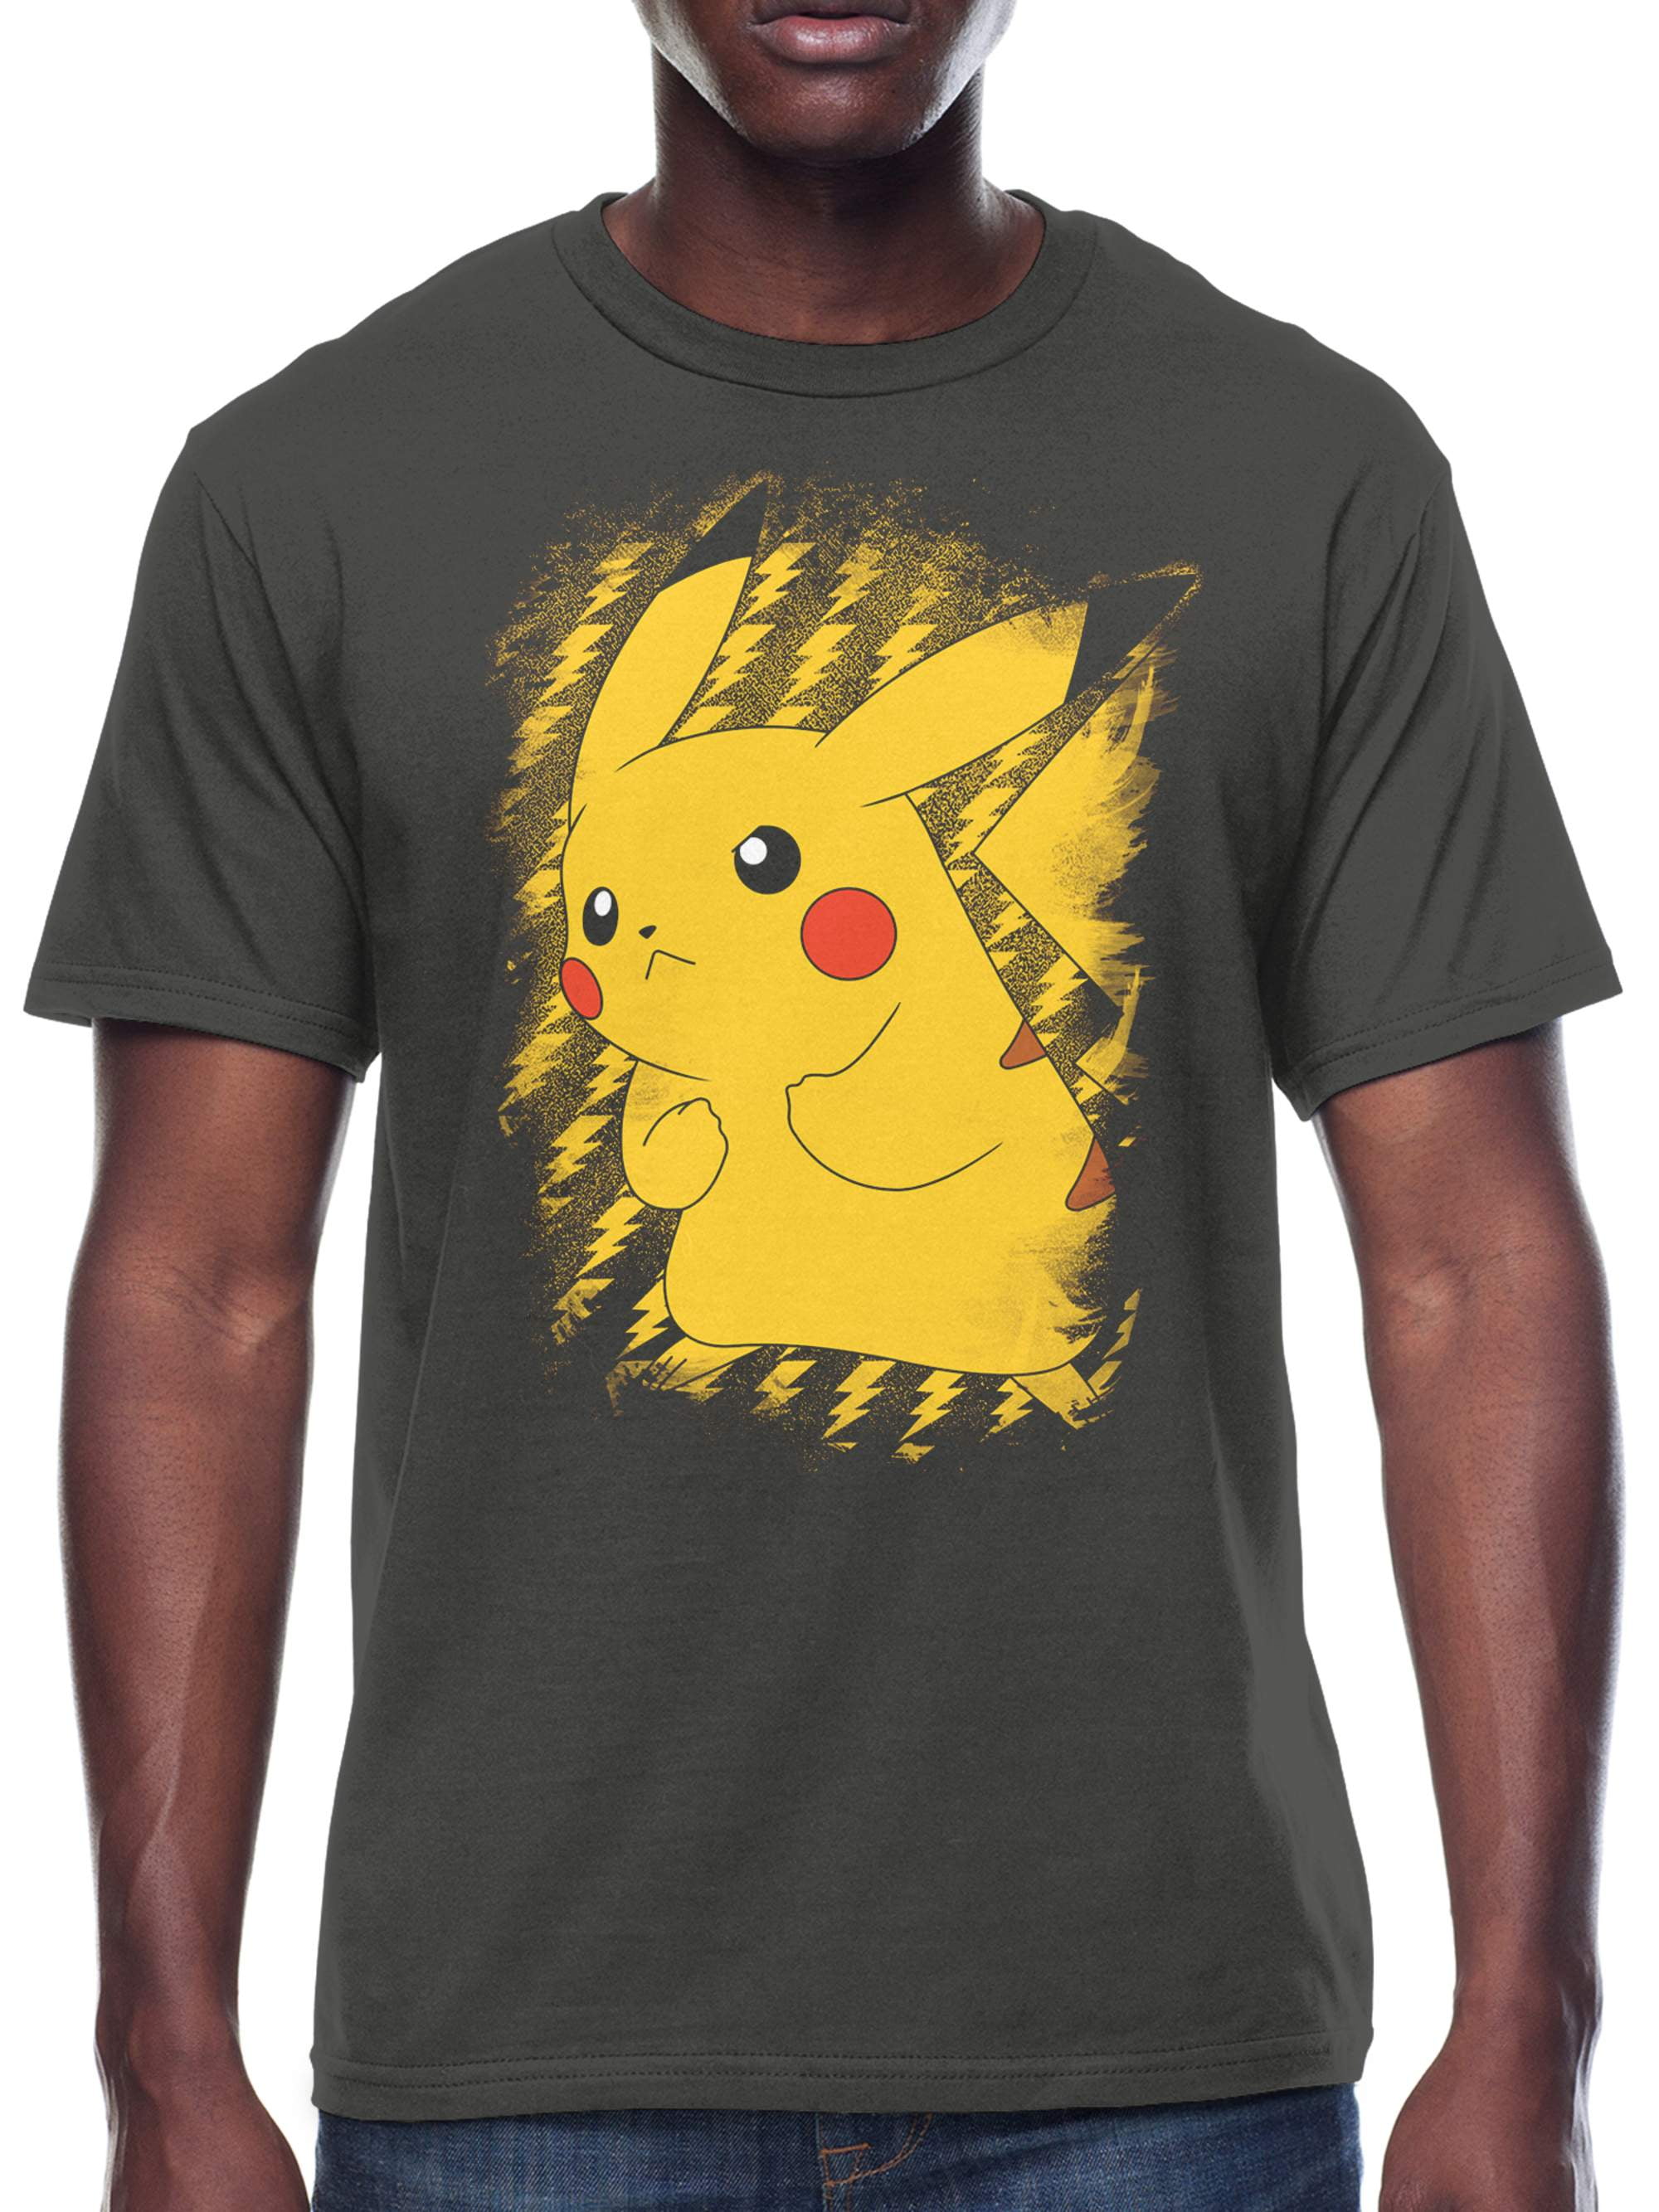 Birthday Personalized Tshirt Pokemon Go Pikachu inspired TShirt Children TShirt Outfit